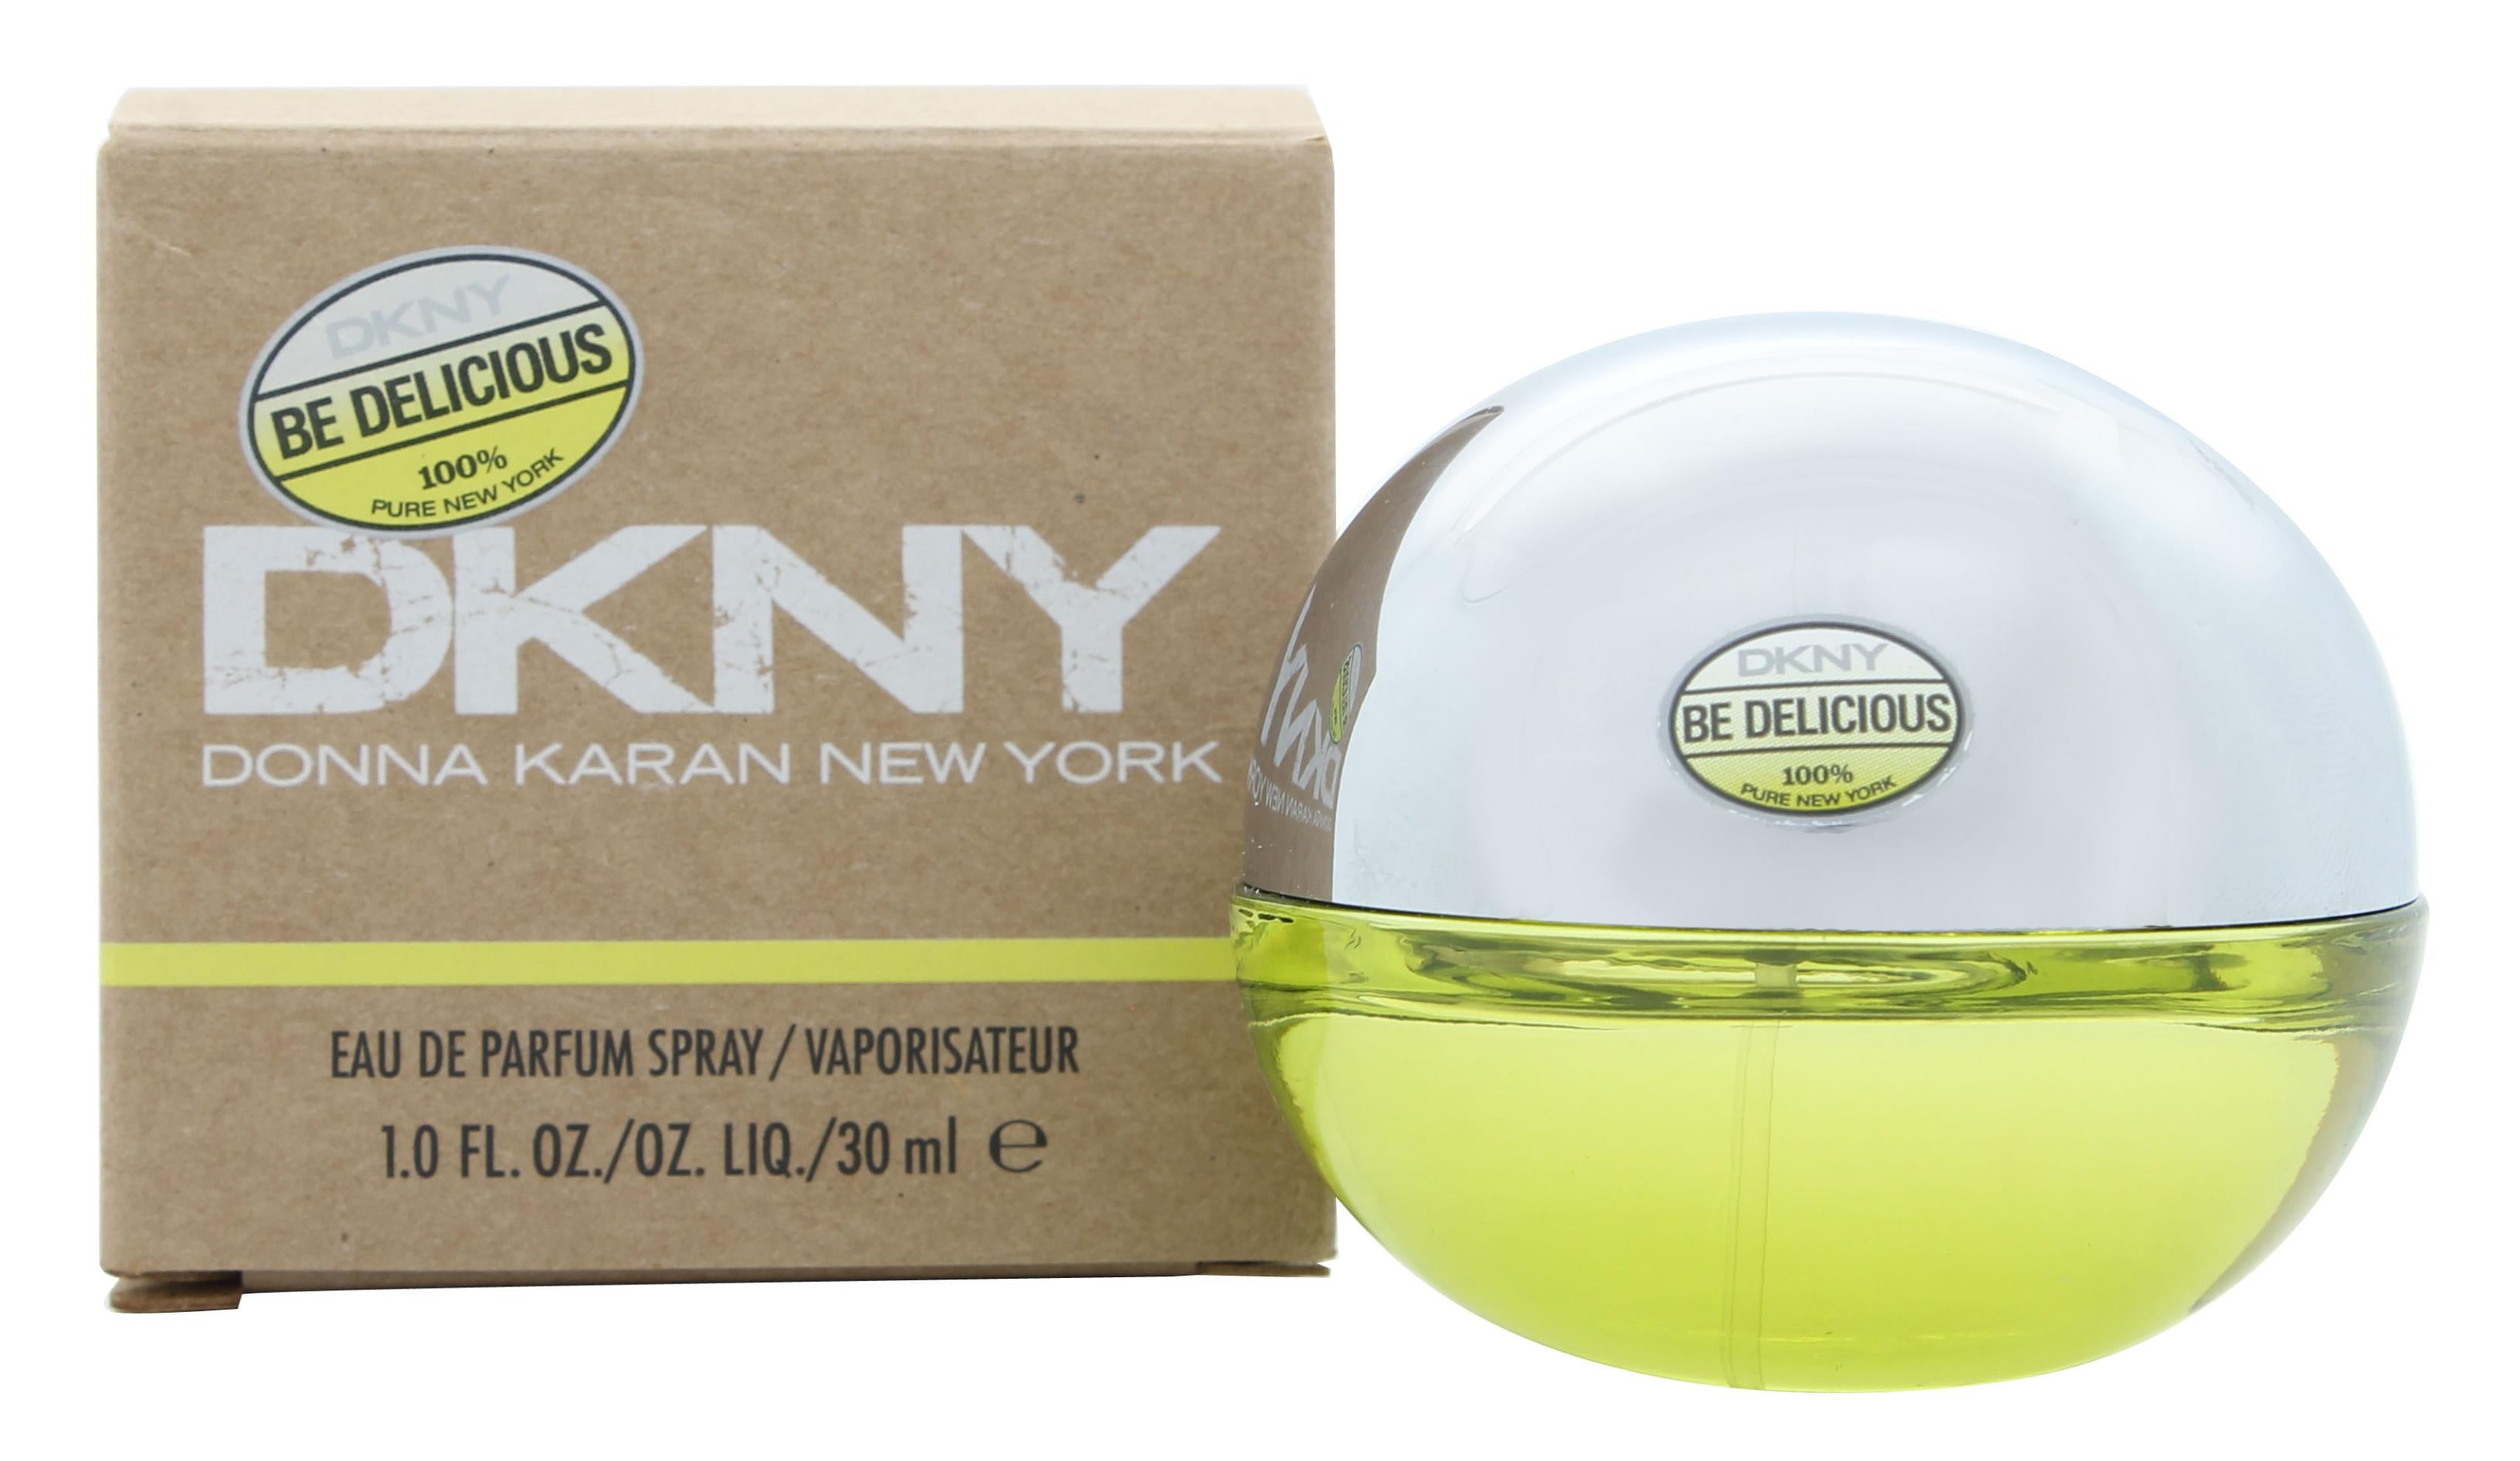 View DKNY Be Delicious Eau de Parfum 30ml spray information